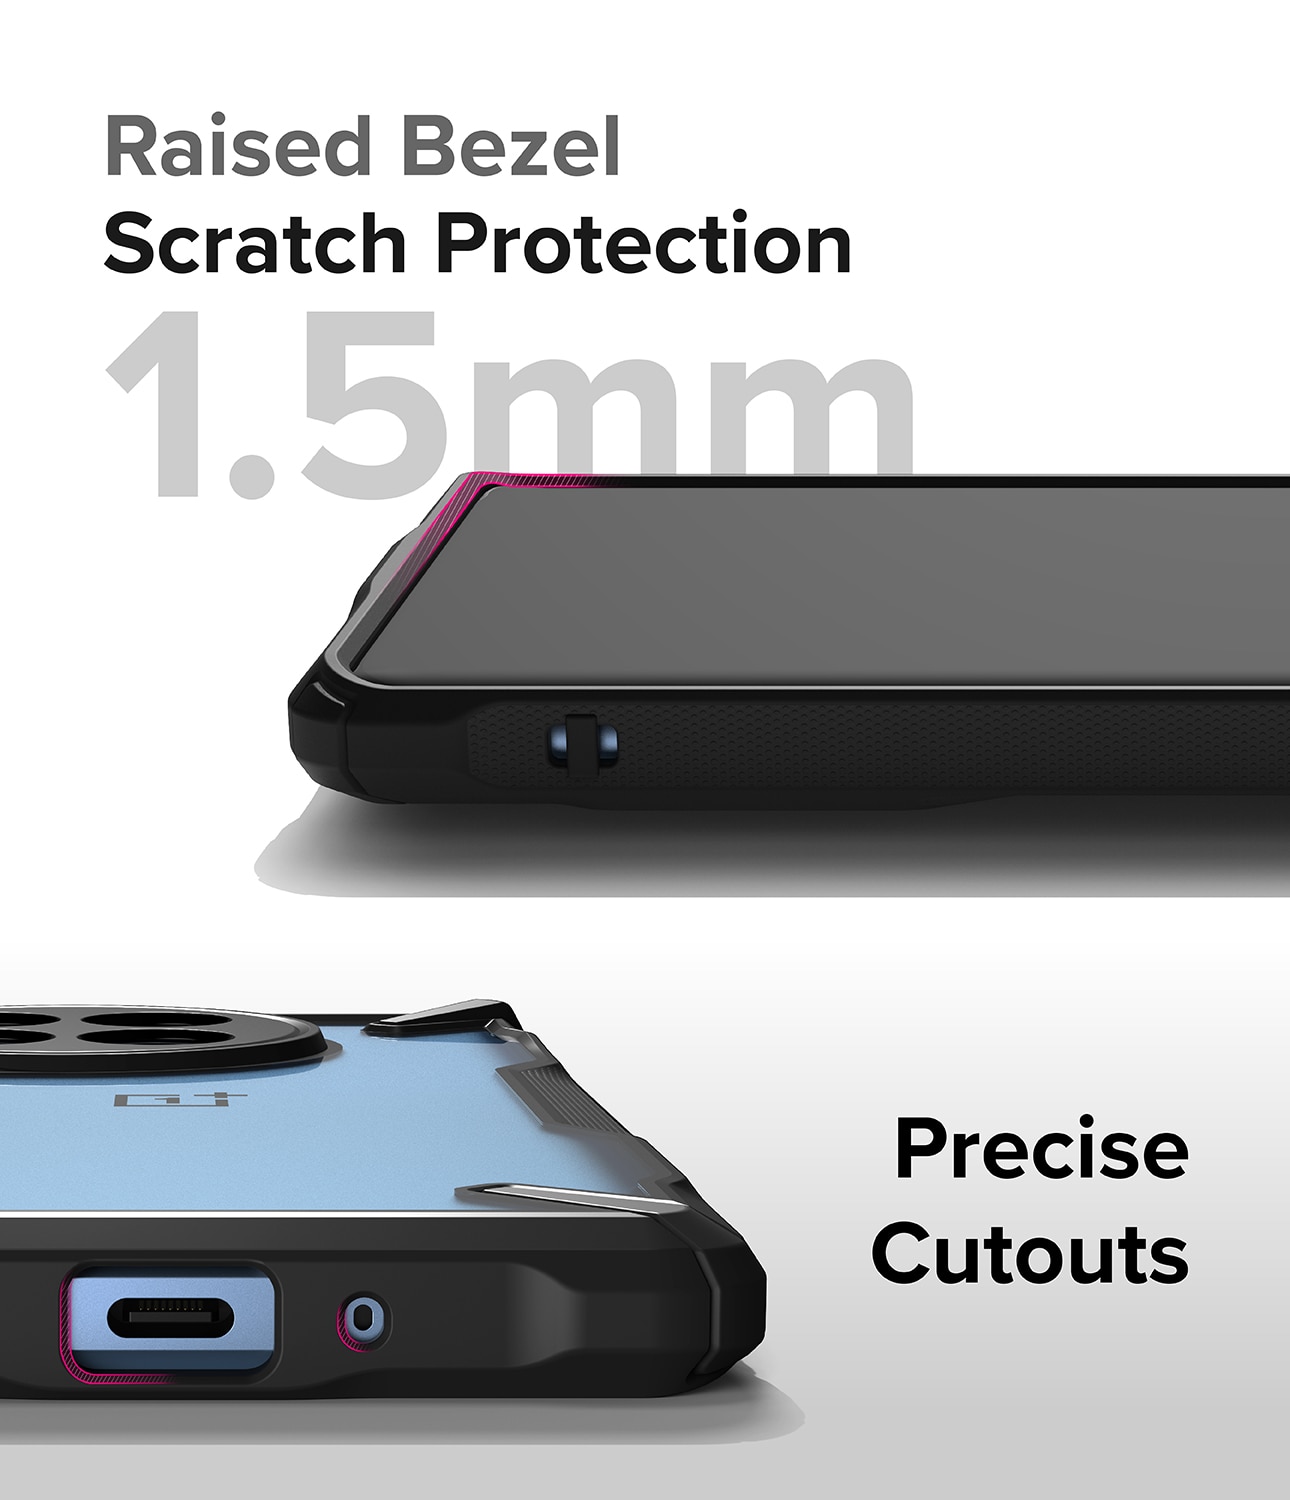 OnePlus 12R Fusion X Skal, svart/genomskinlig